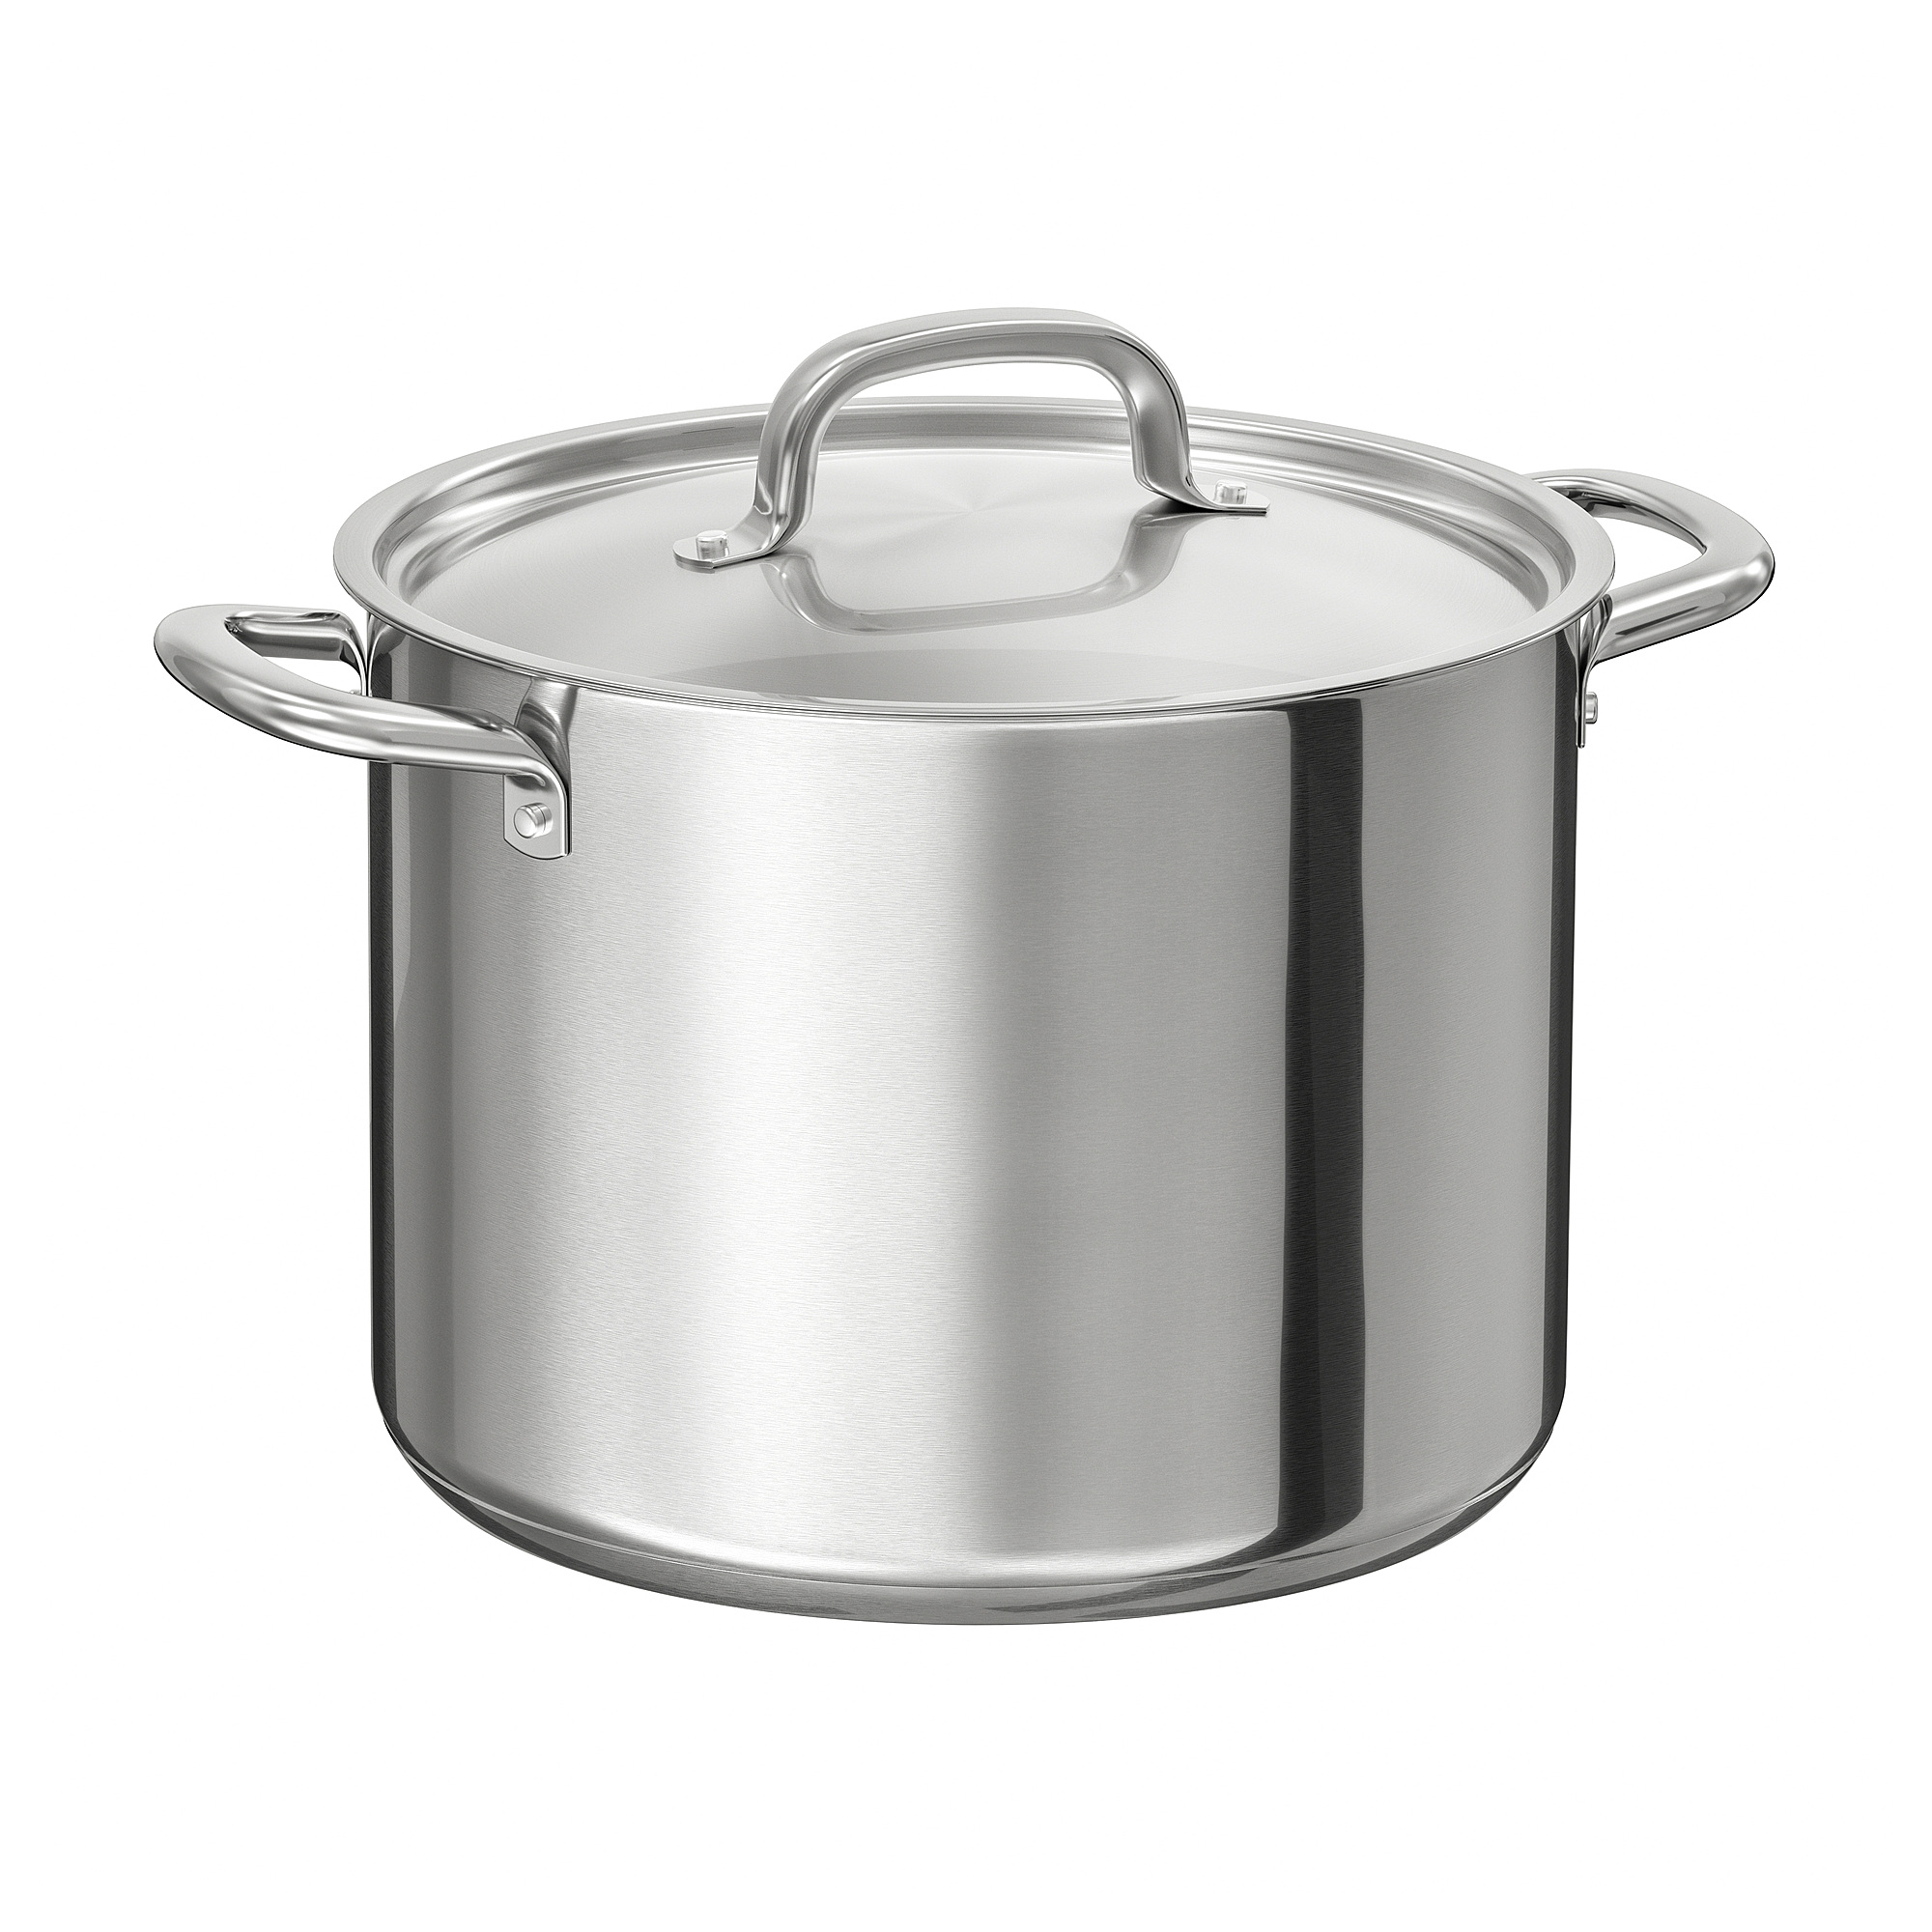 IKEA 365+ pot with lid